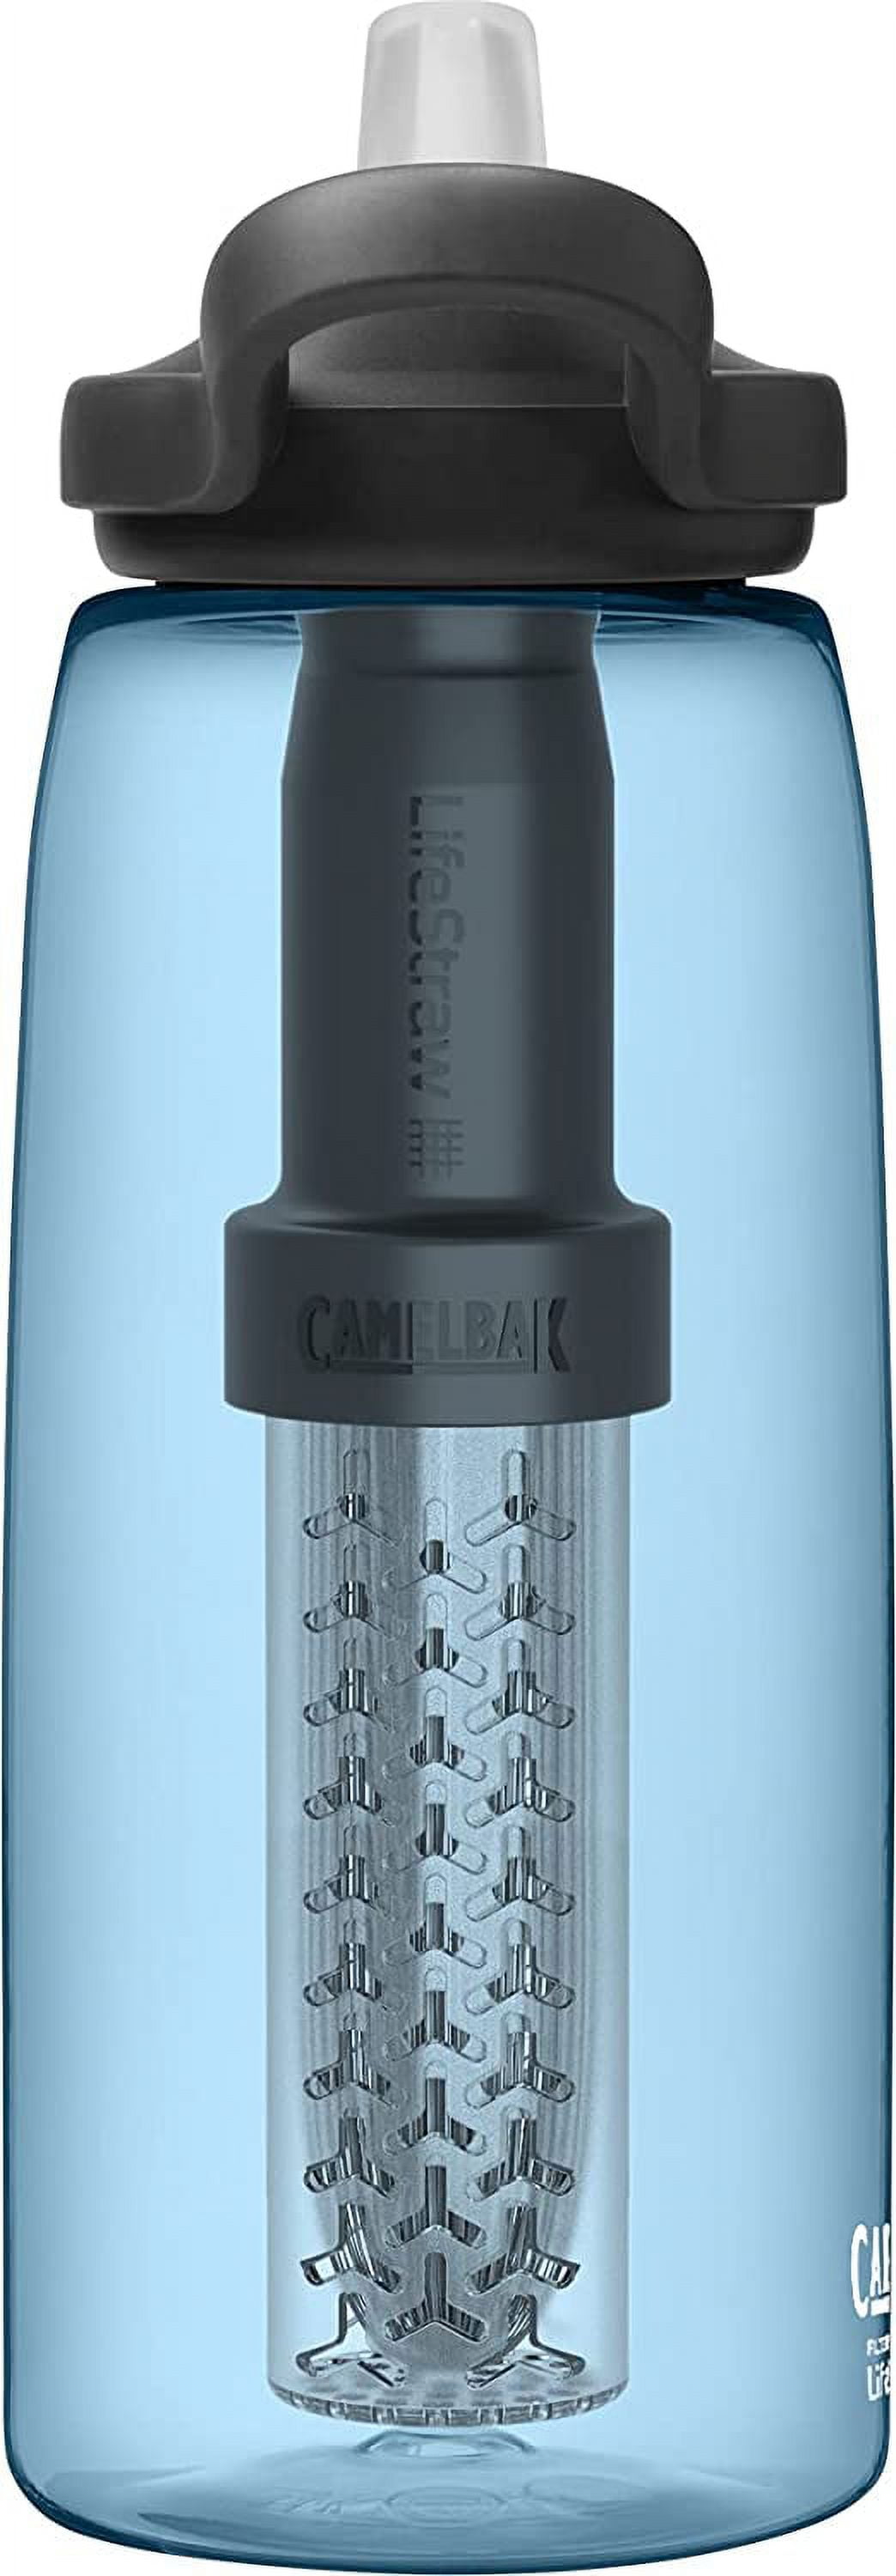 CamelBak's latest bottles integrate LifeStraw's water filtering tech